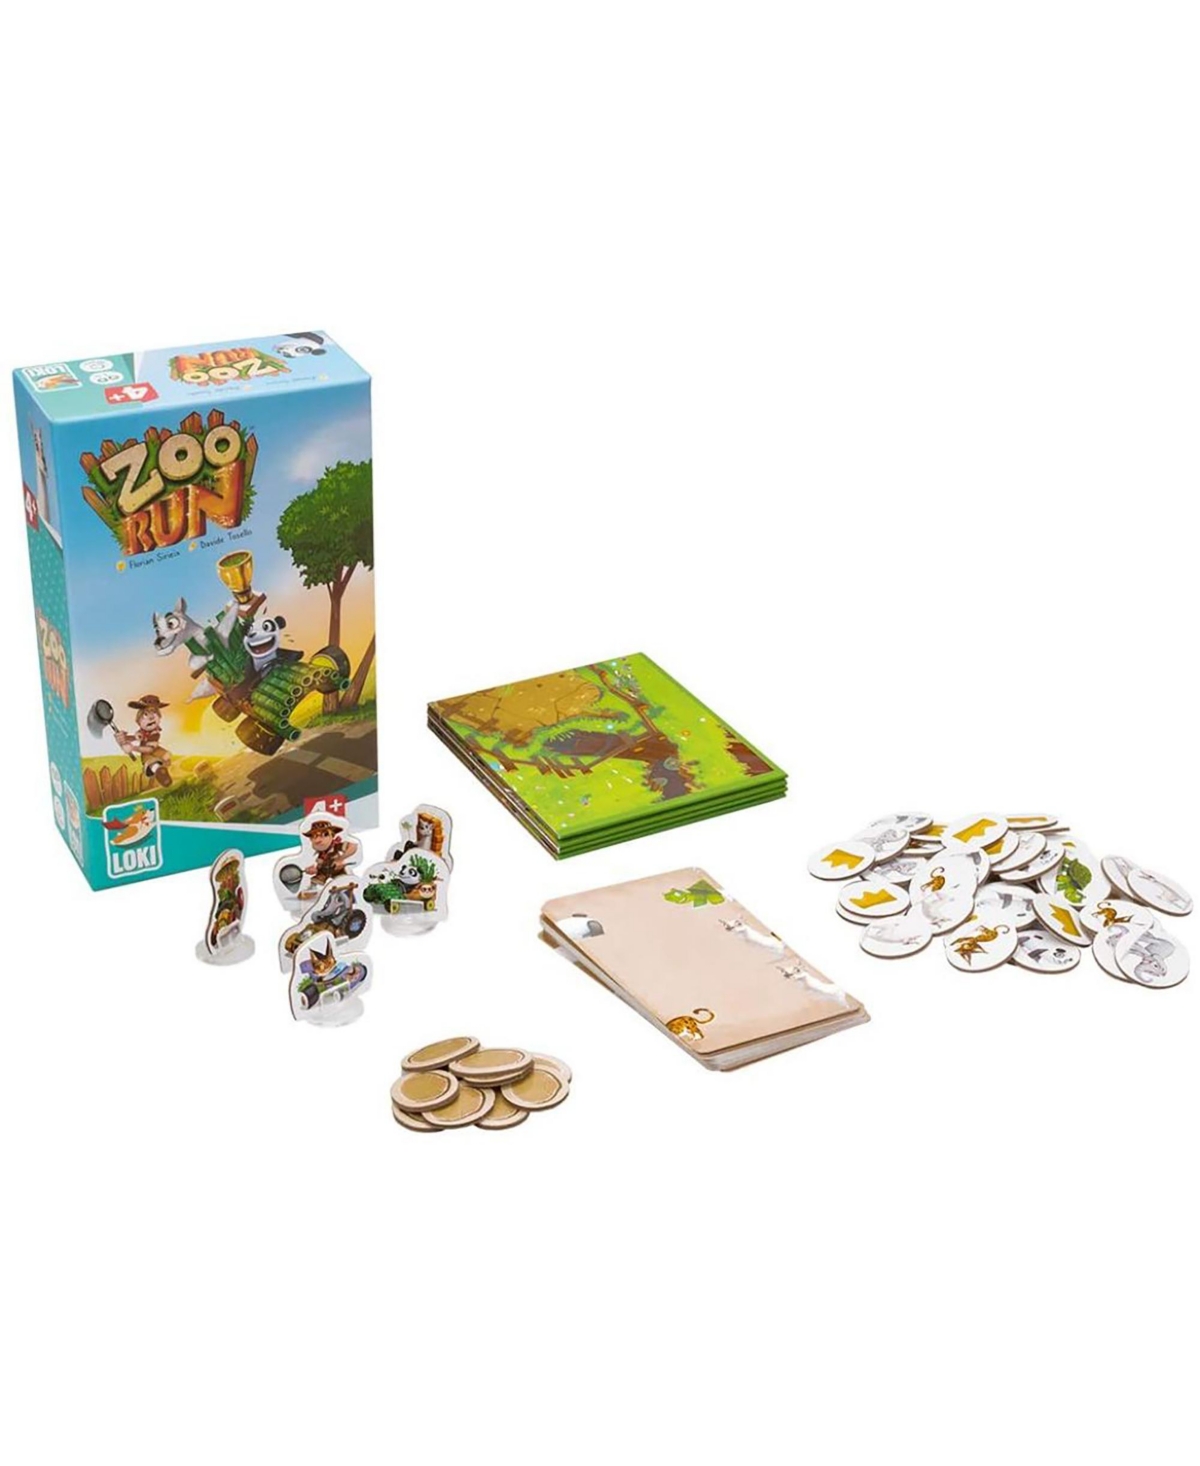 Shop Iello Zoo Run Loki Children's Card Placement Game In Multi